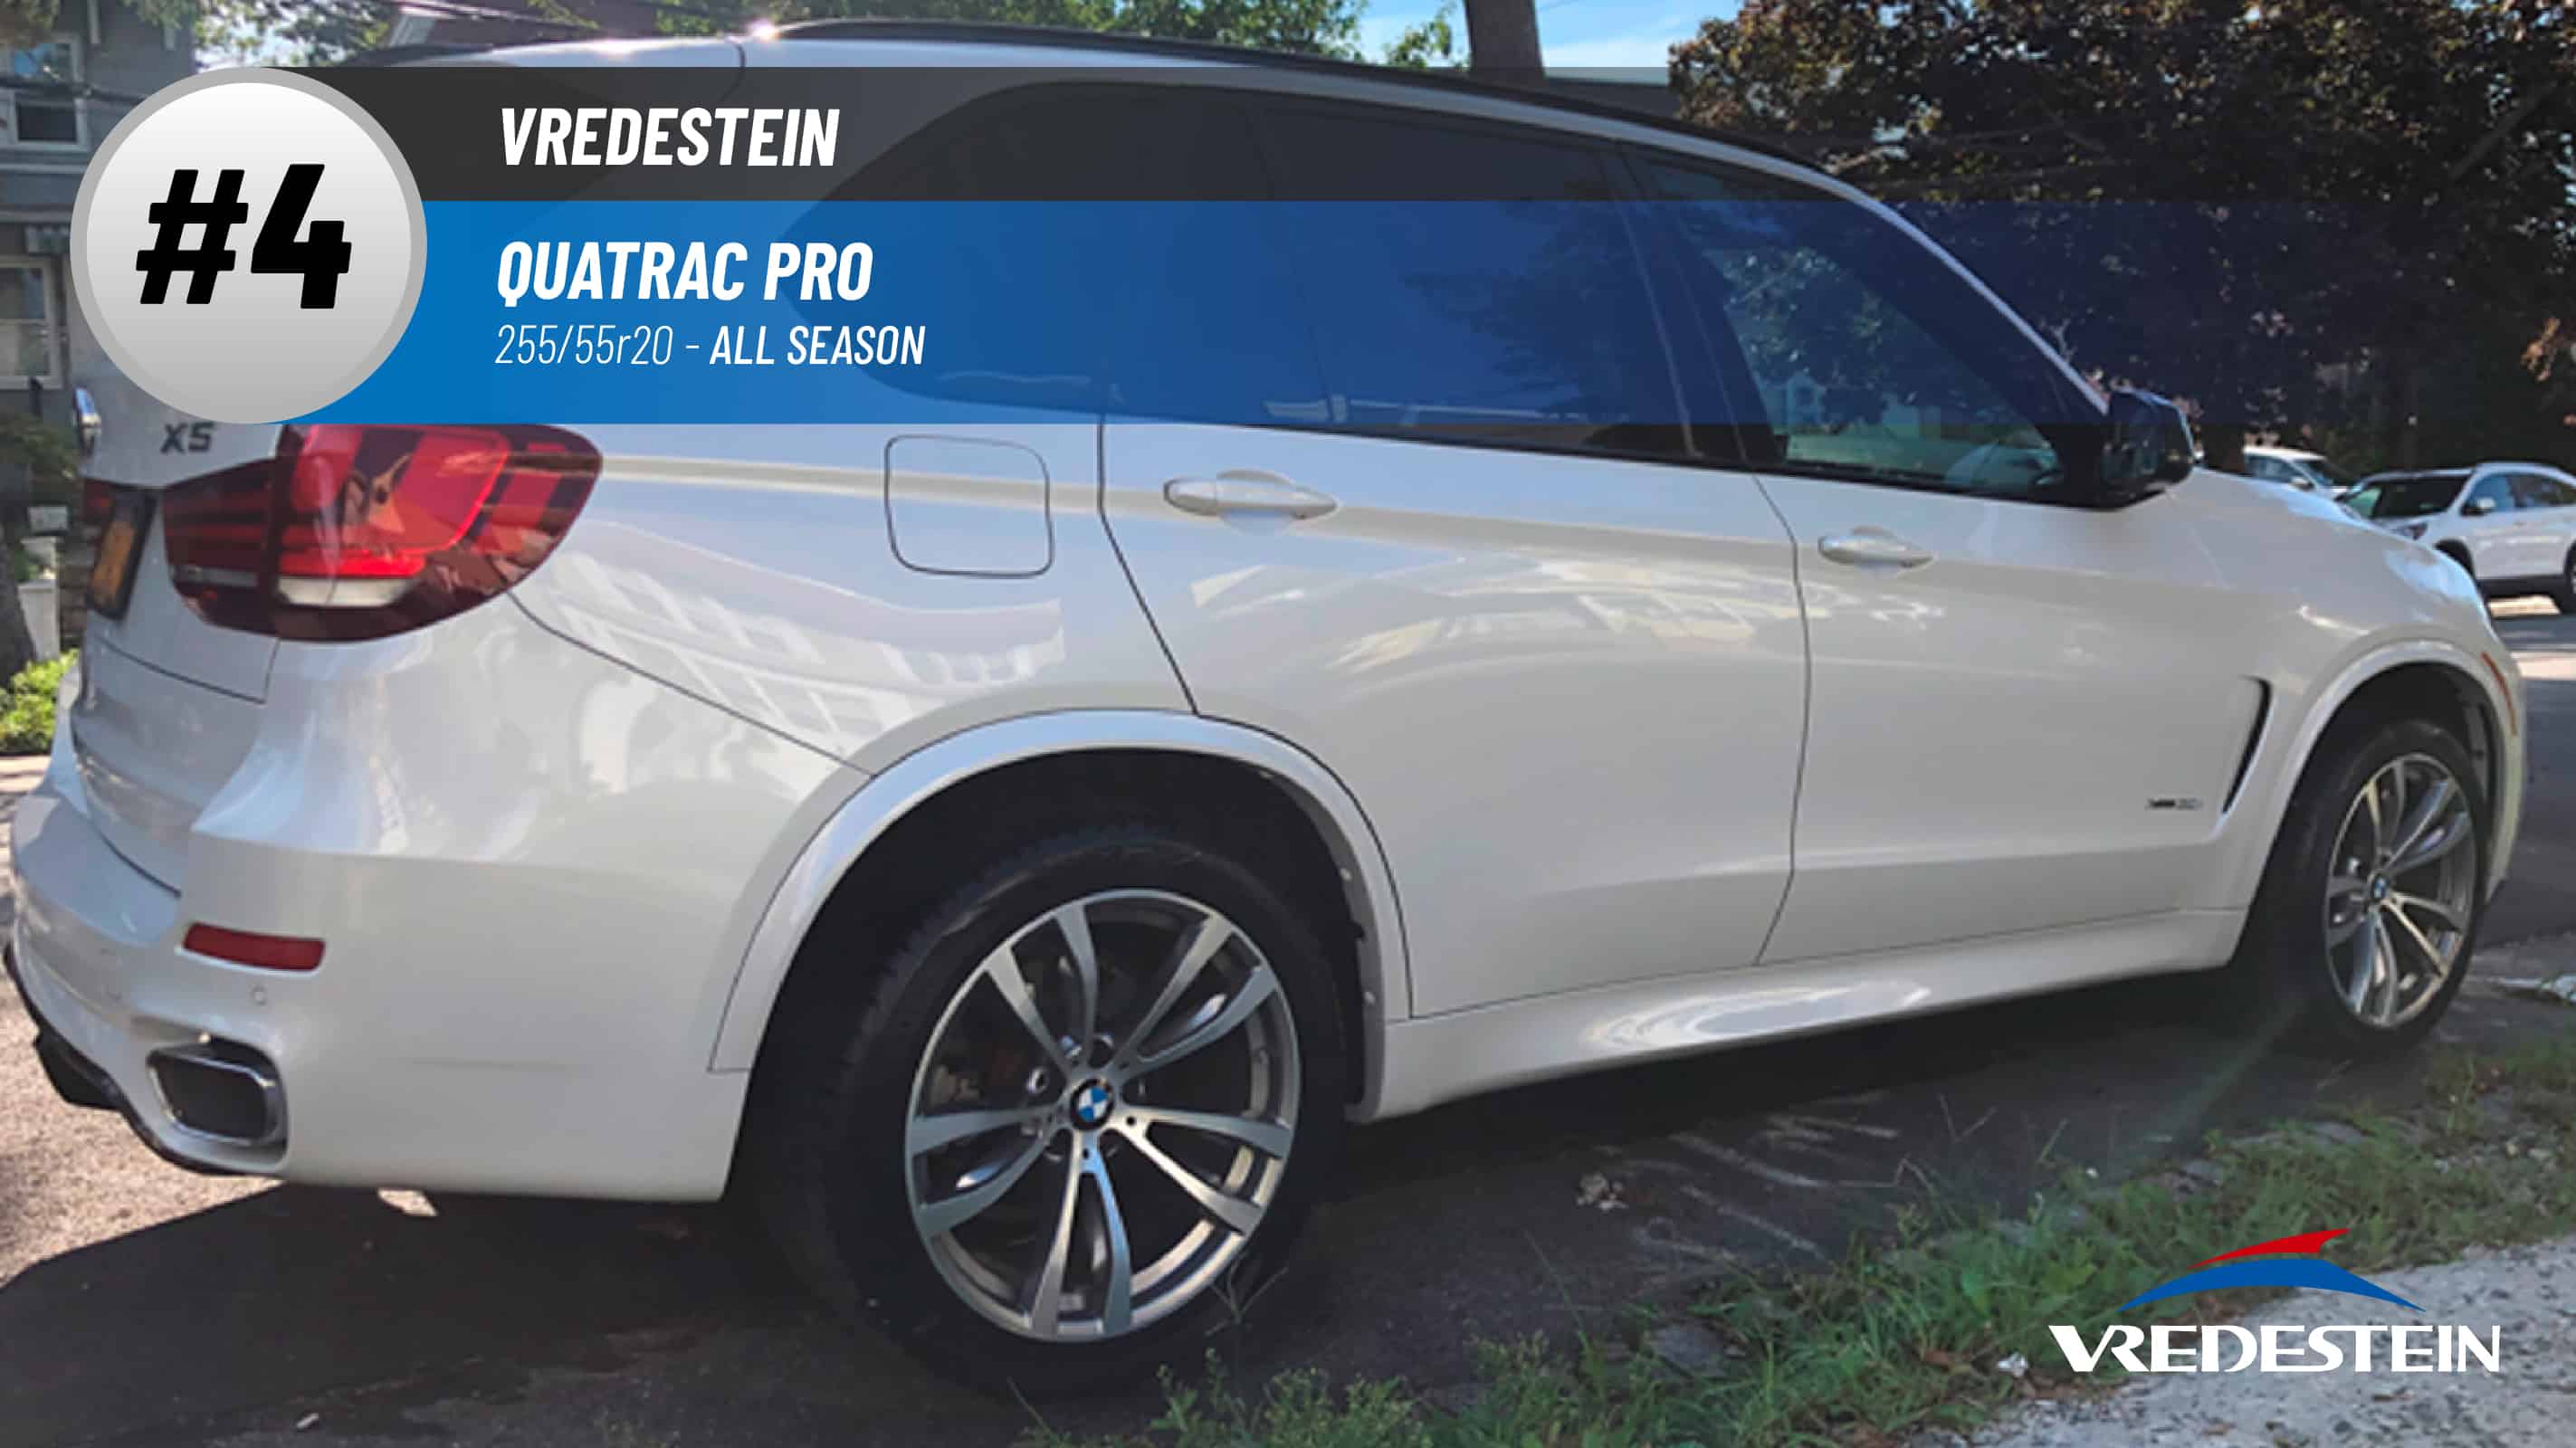 Top #4 All Season Tires: Vredestein Quatrac Pro – best 255/55r20